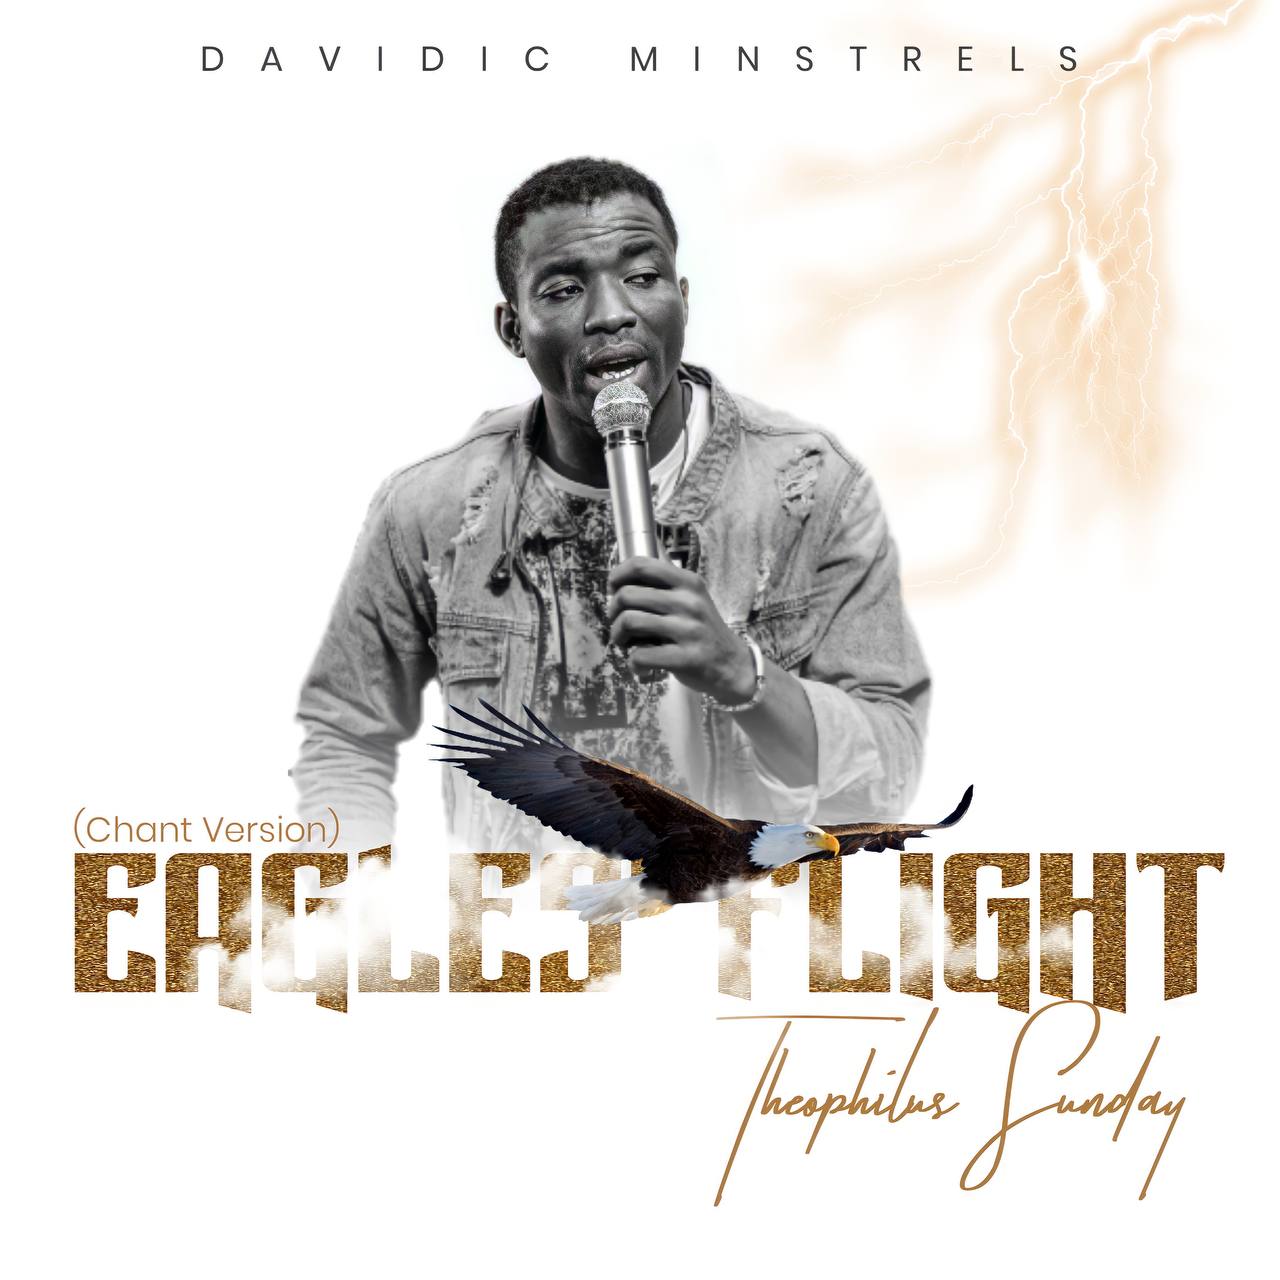 EAGLES FLIGHT Theophilus Sunday Mp3 Download Free (Audio+Lyrics) 20